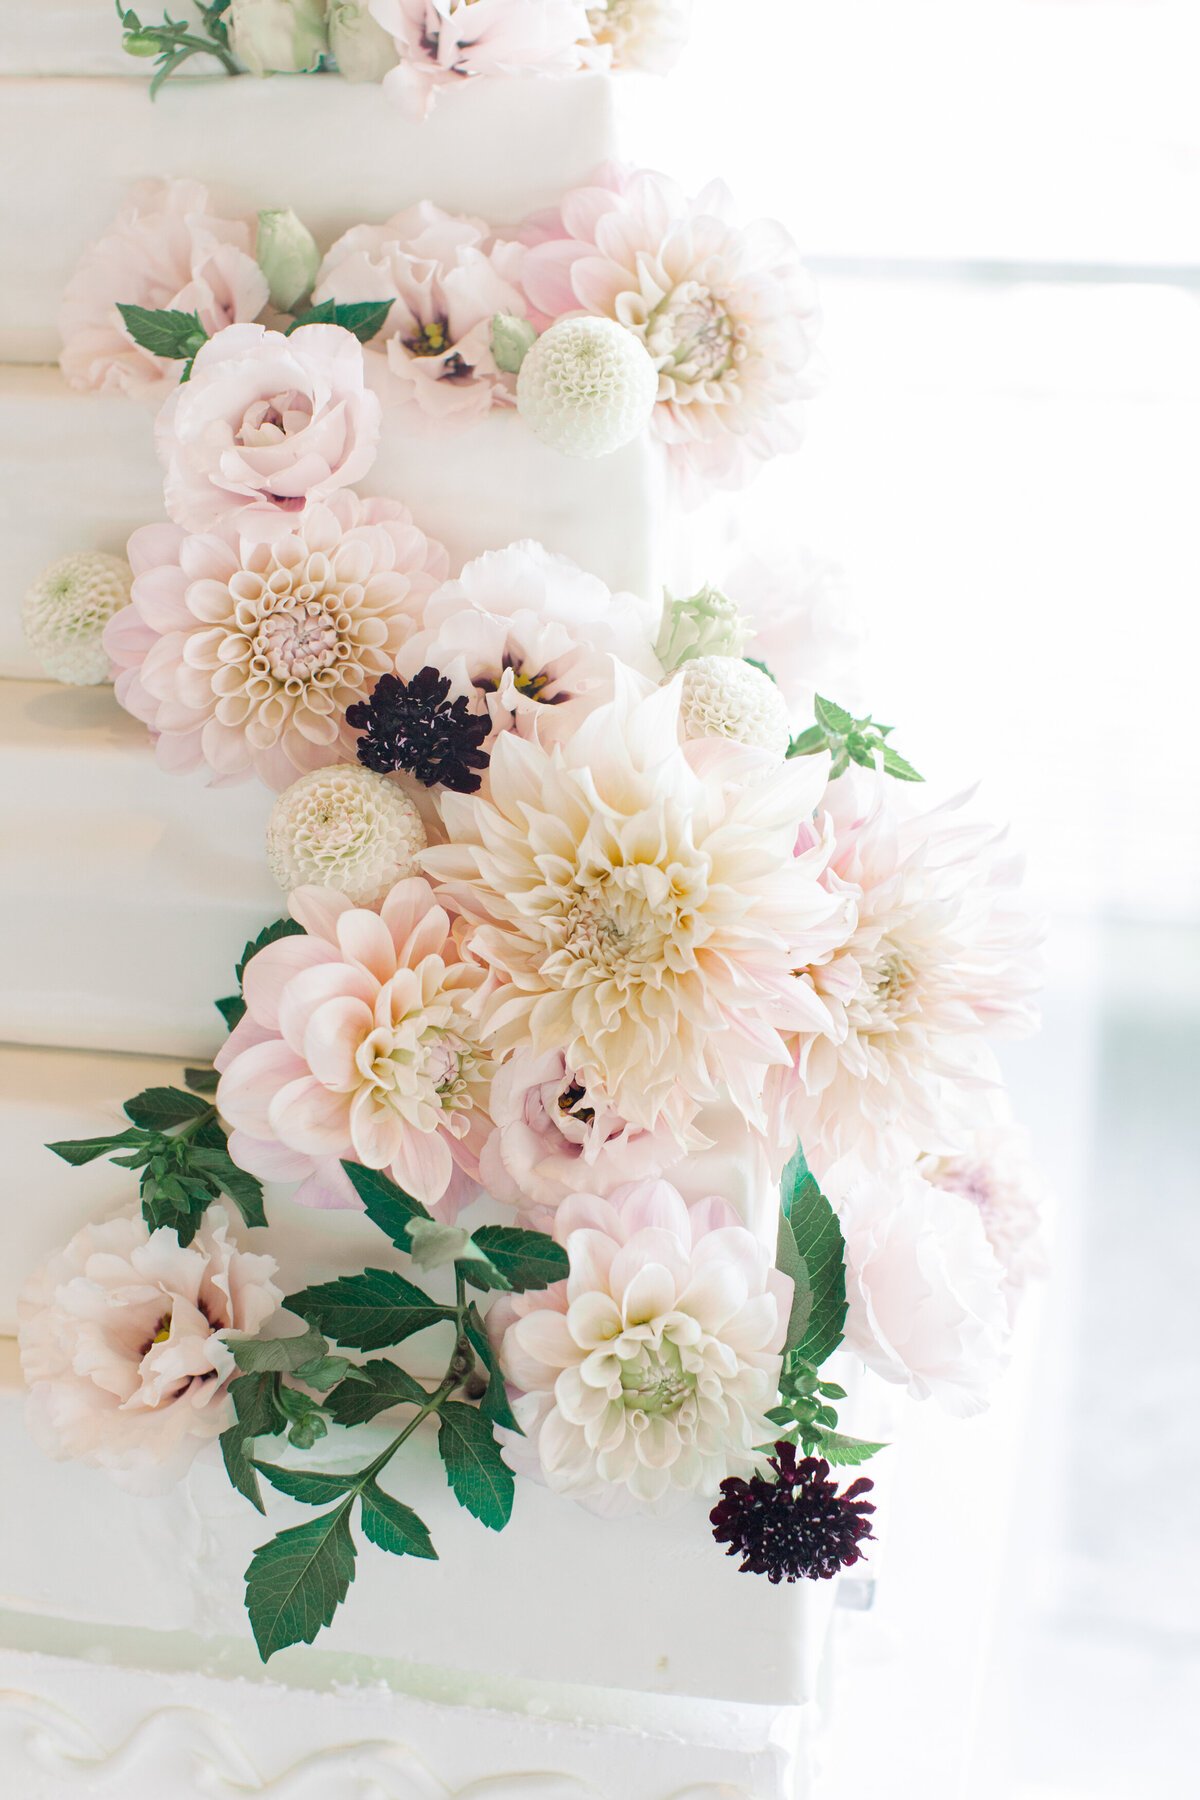 Atelier-Carmel-Wedding-Florist-GALLERY-Decor-38